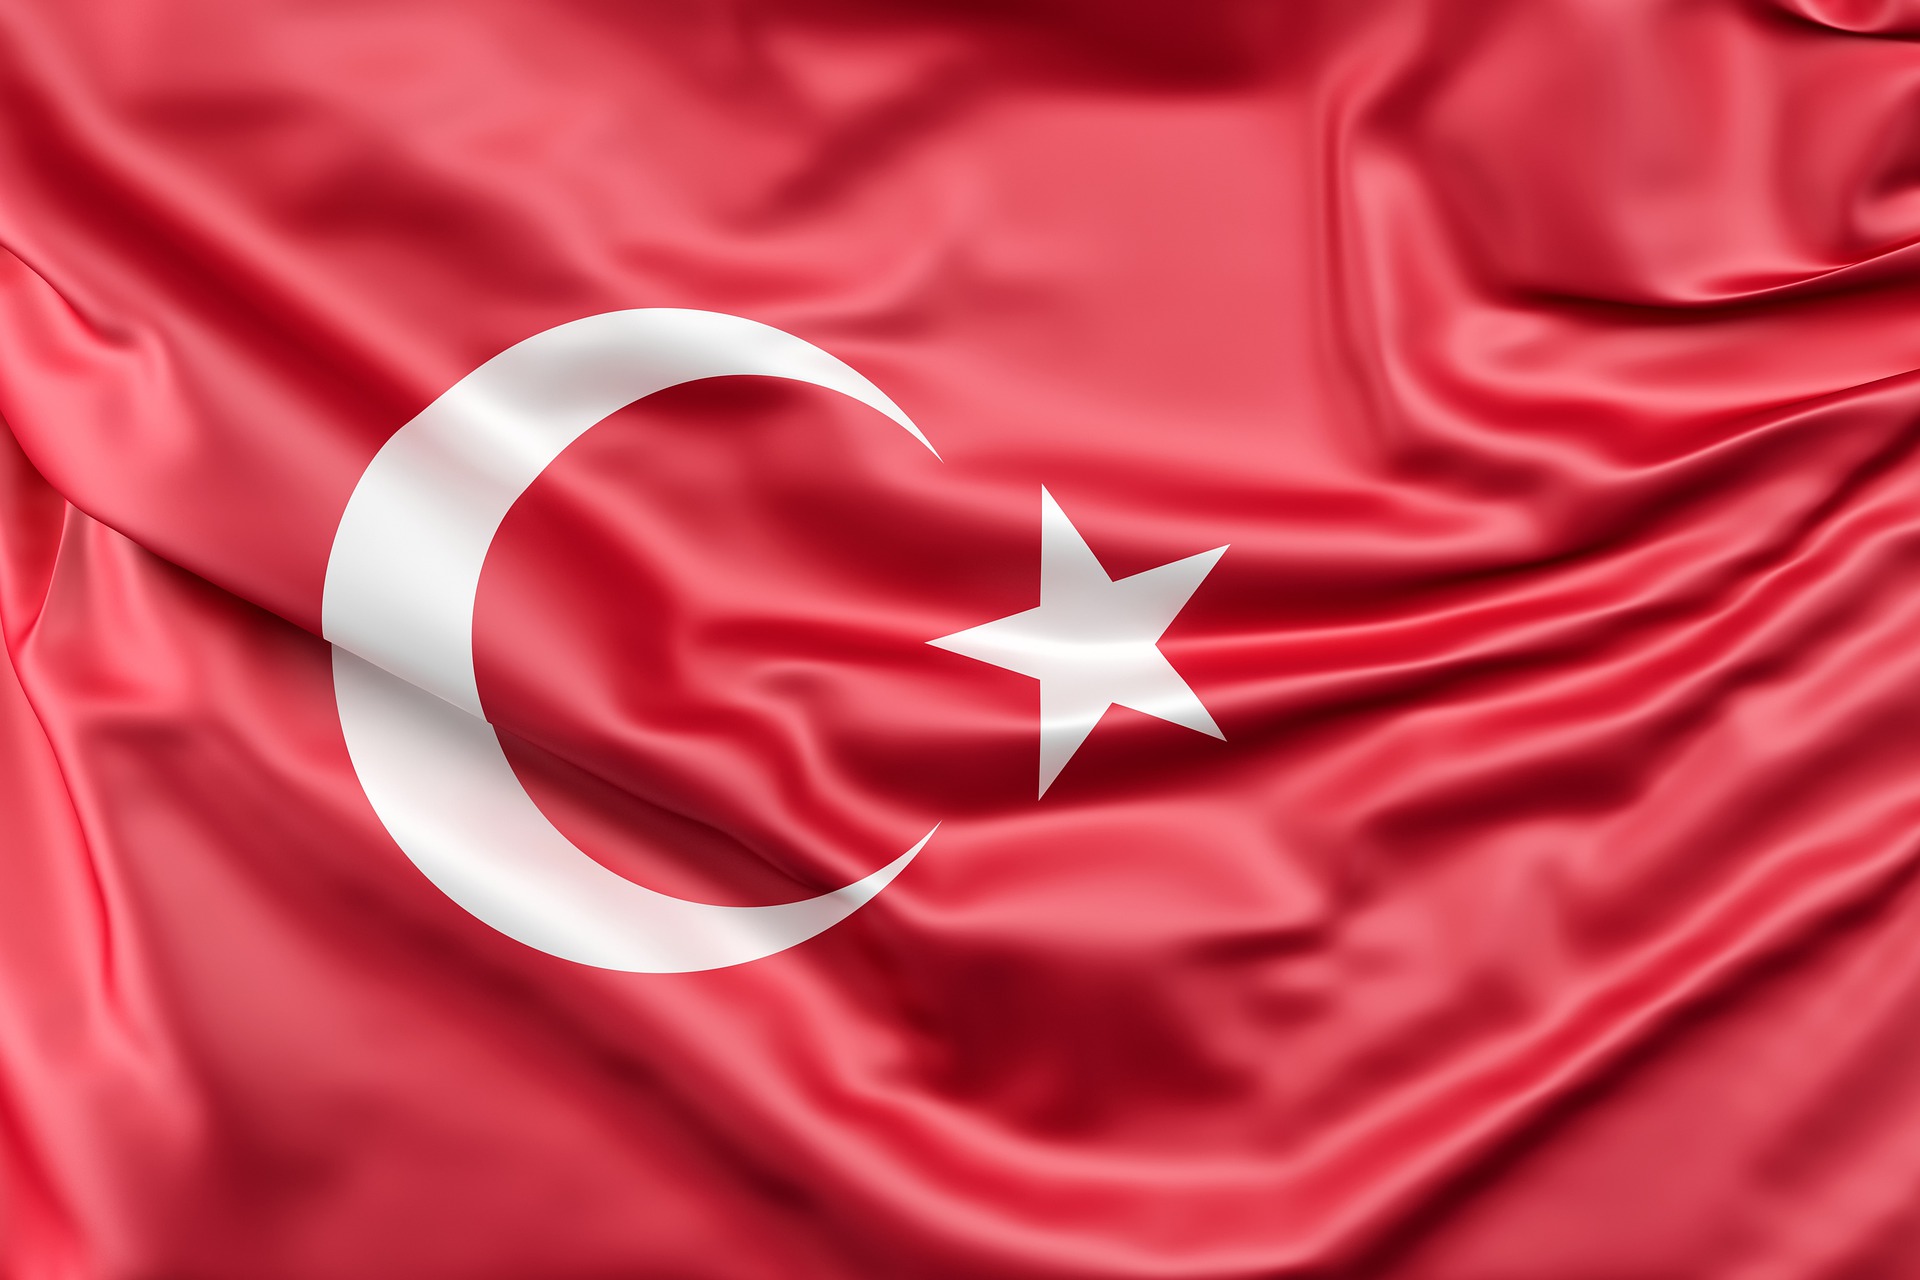 Türkiye conducts 'effective' fight targeted at terror publicity